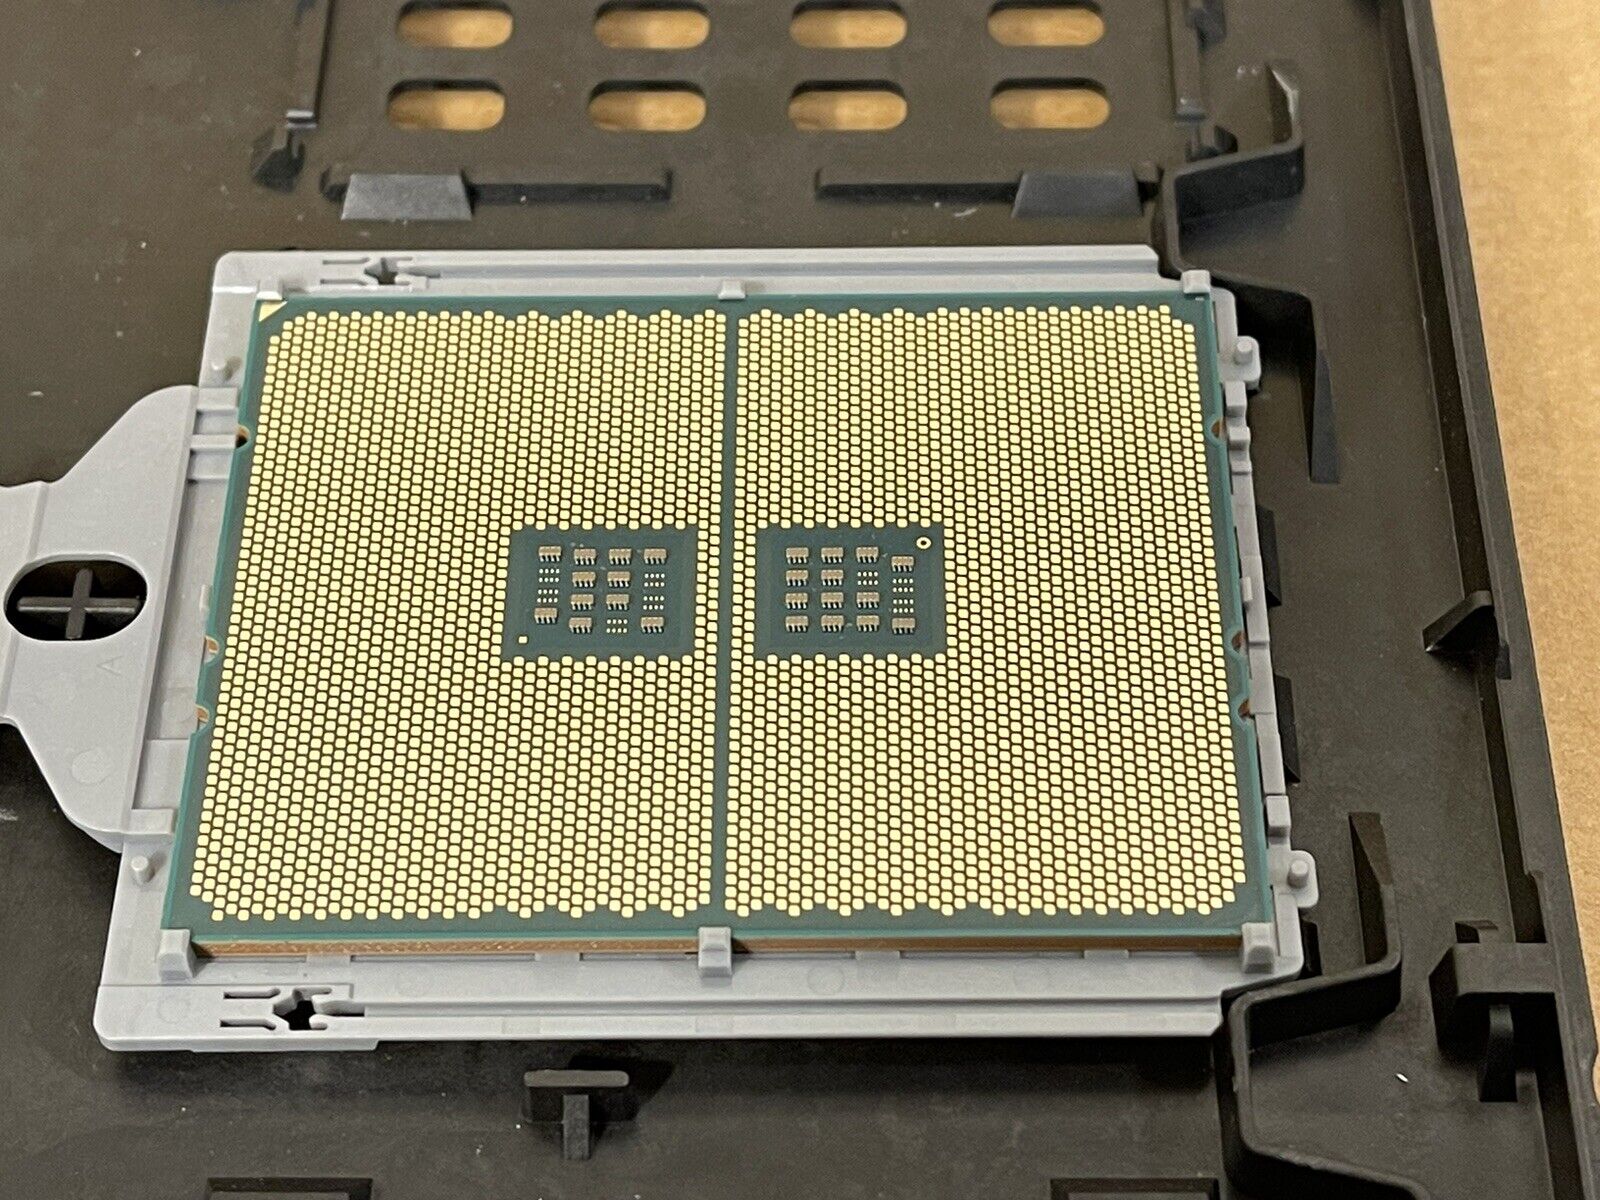 AMD Epyc 7513 Milan 32-Core 2.6GHz 128MB SP3 Socket 200W Processor CPU